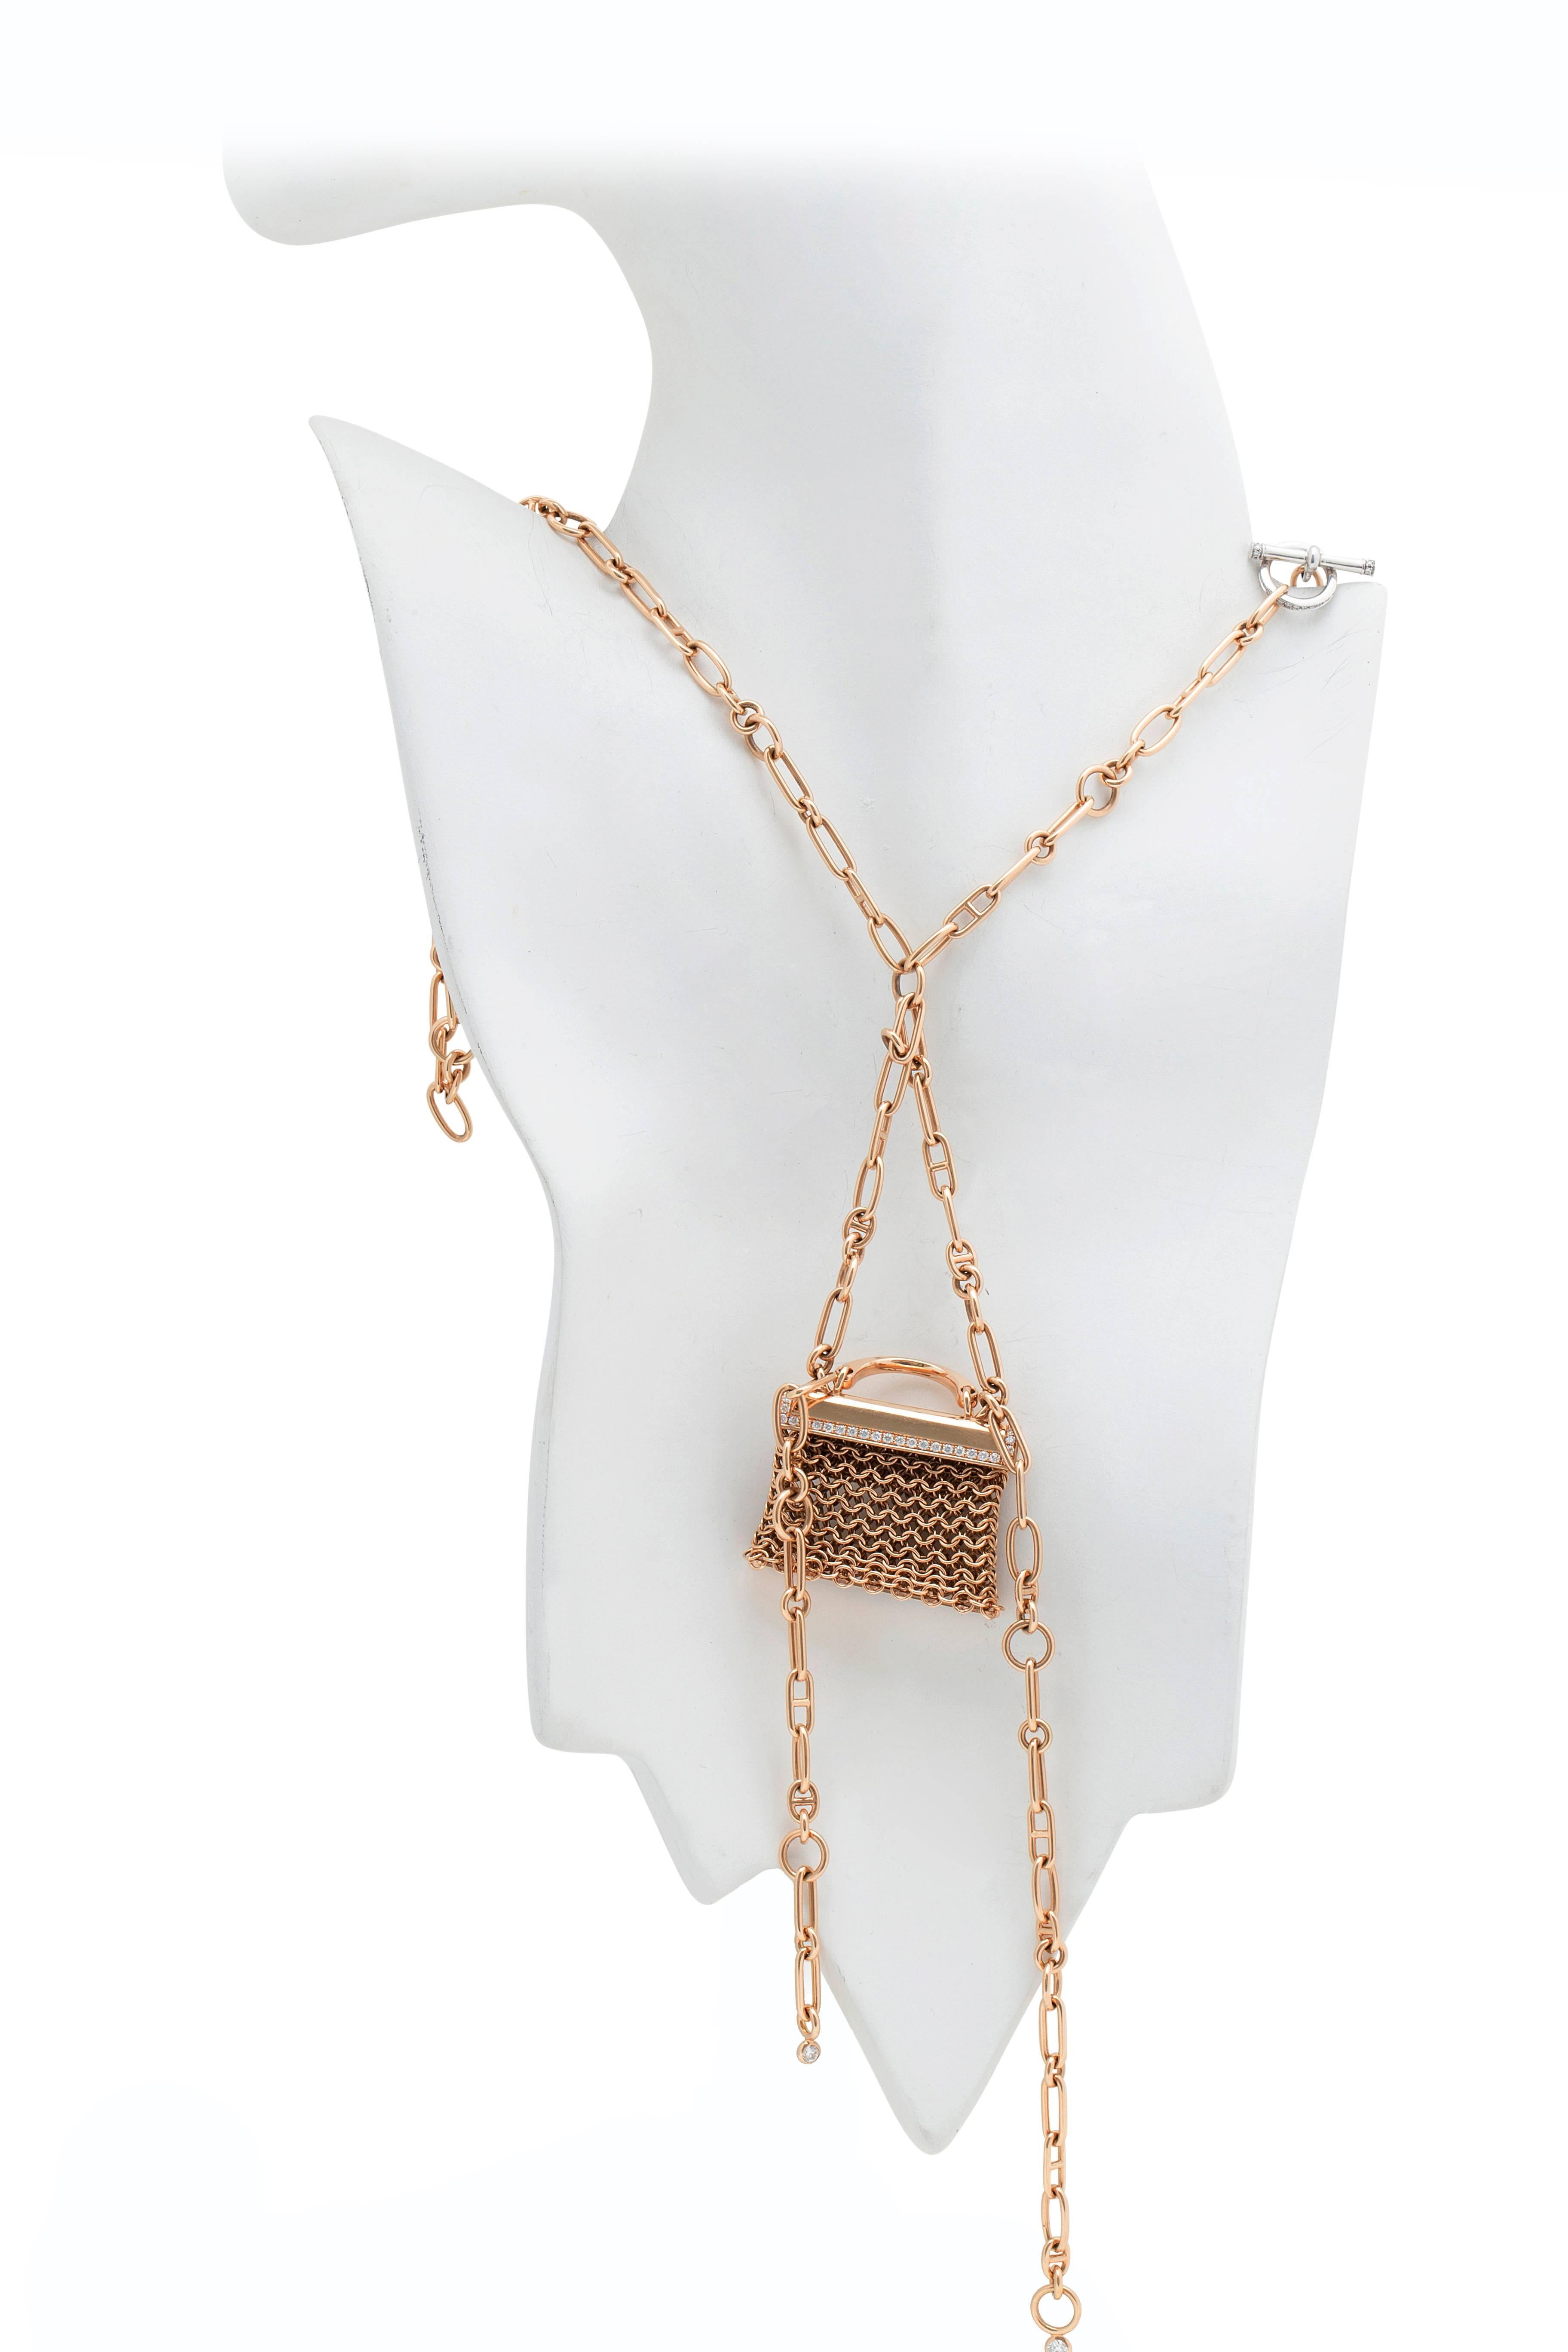 Hermes  Pink Gold and Diamond Handbag Necklace For Sale 6